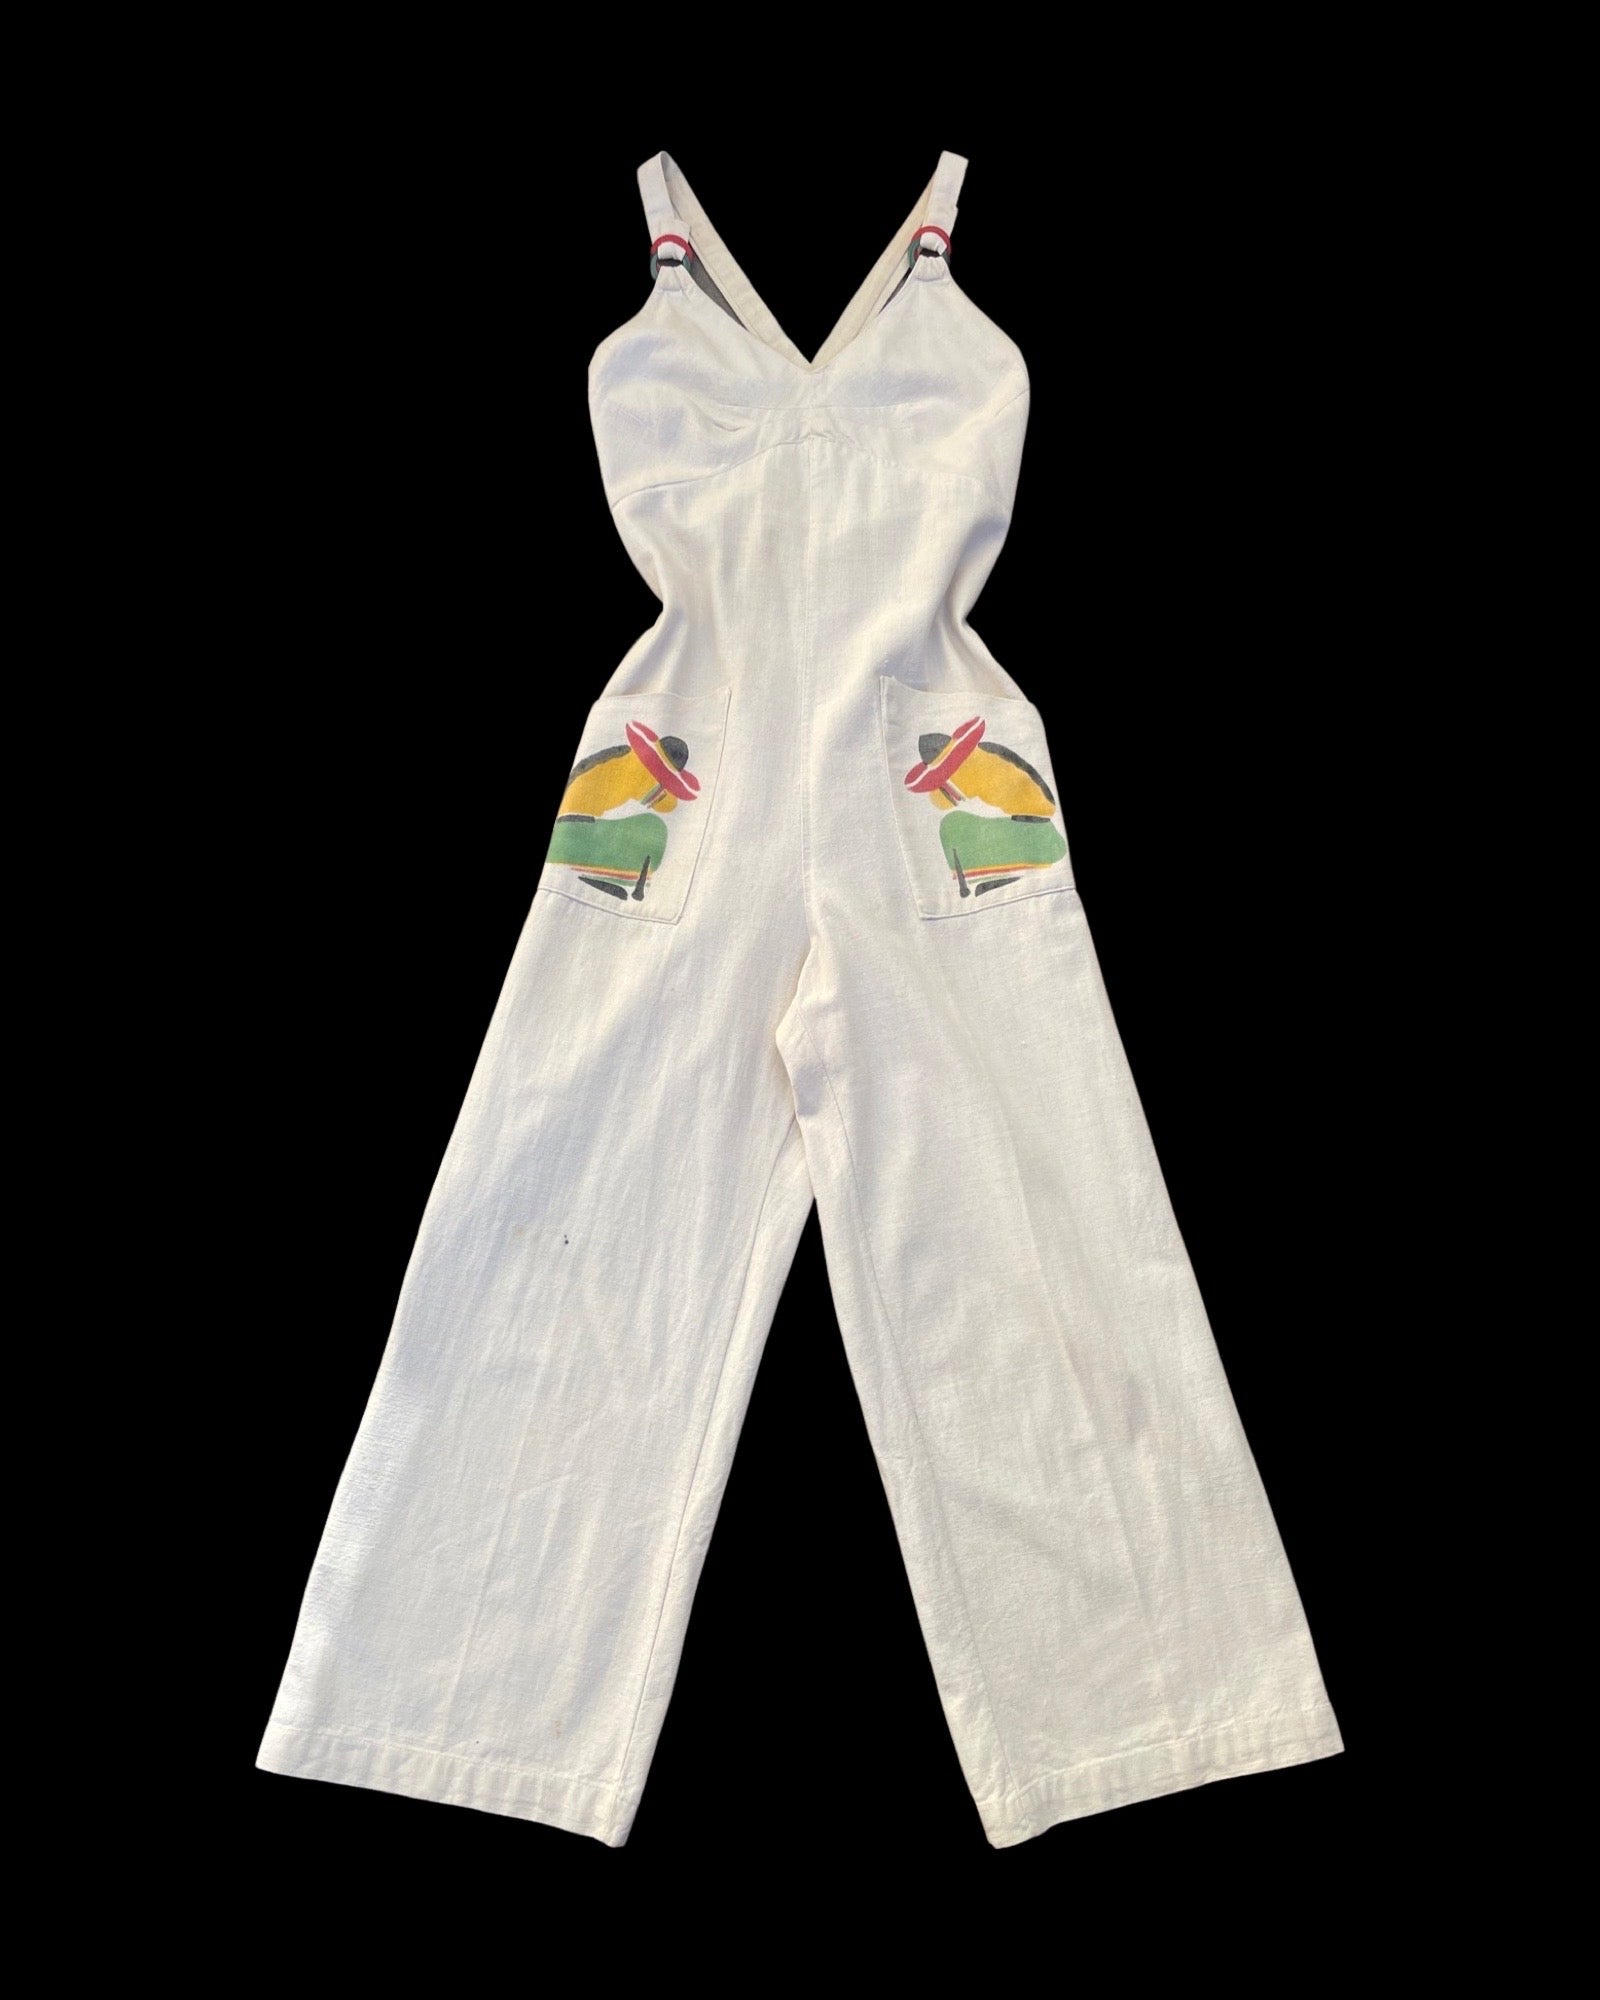 1930s Cotton Linen Ladies Overalls